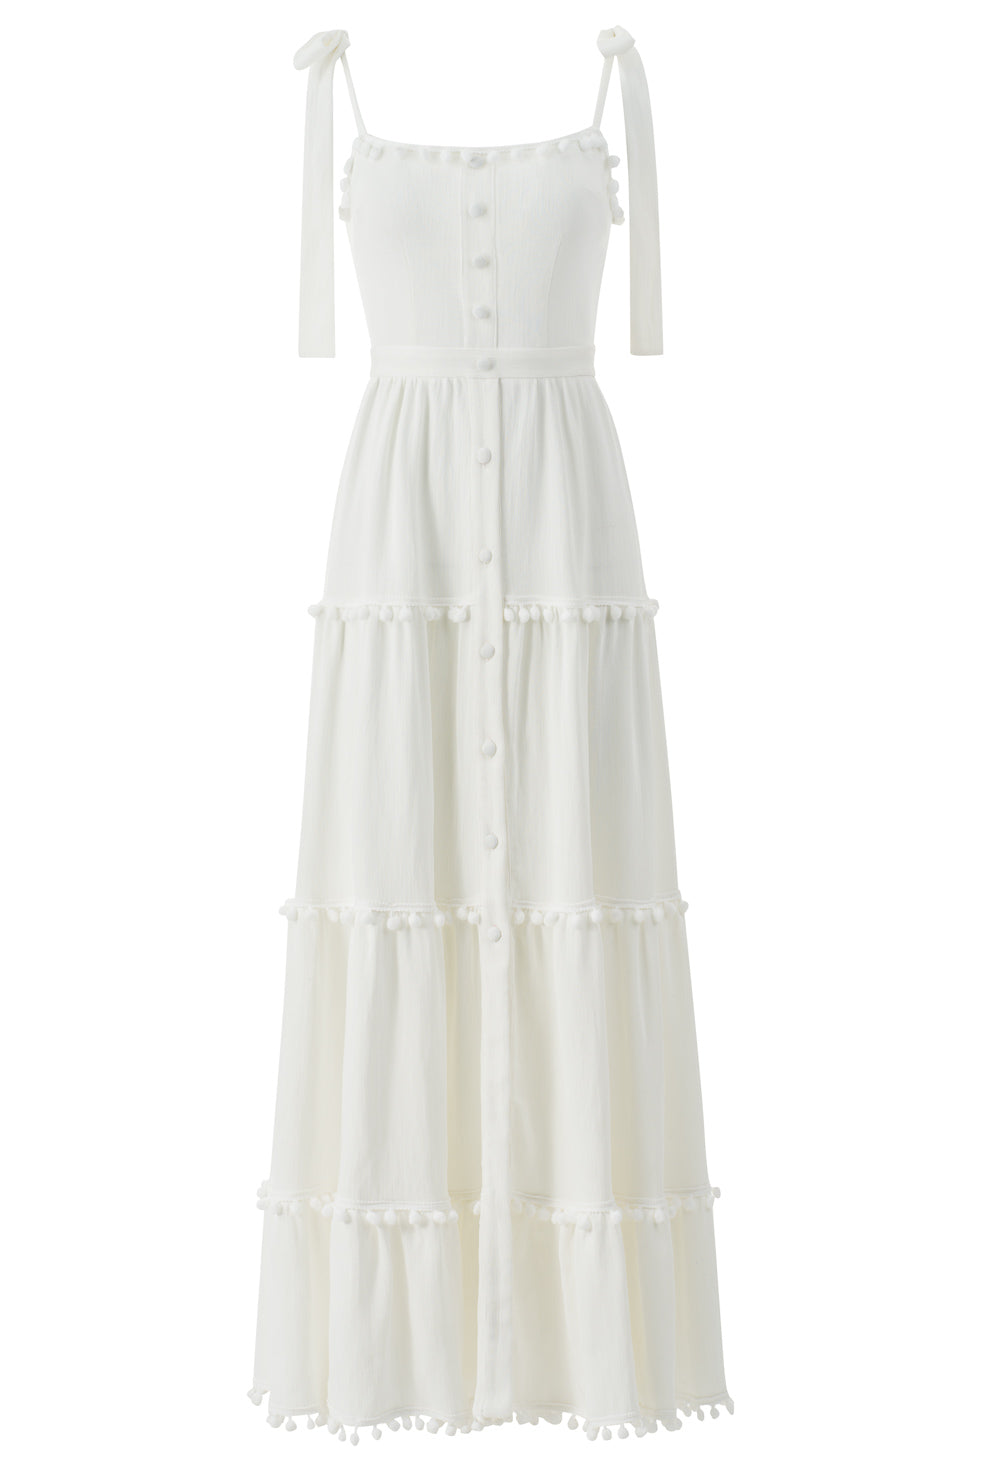 Sydney White Maxi Bow Dress